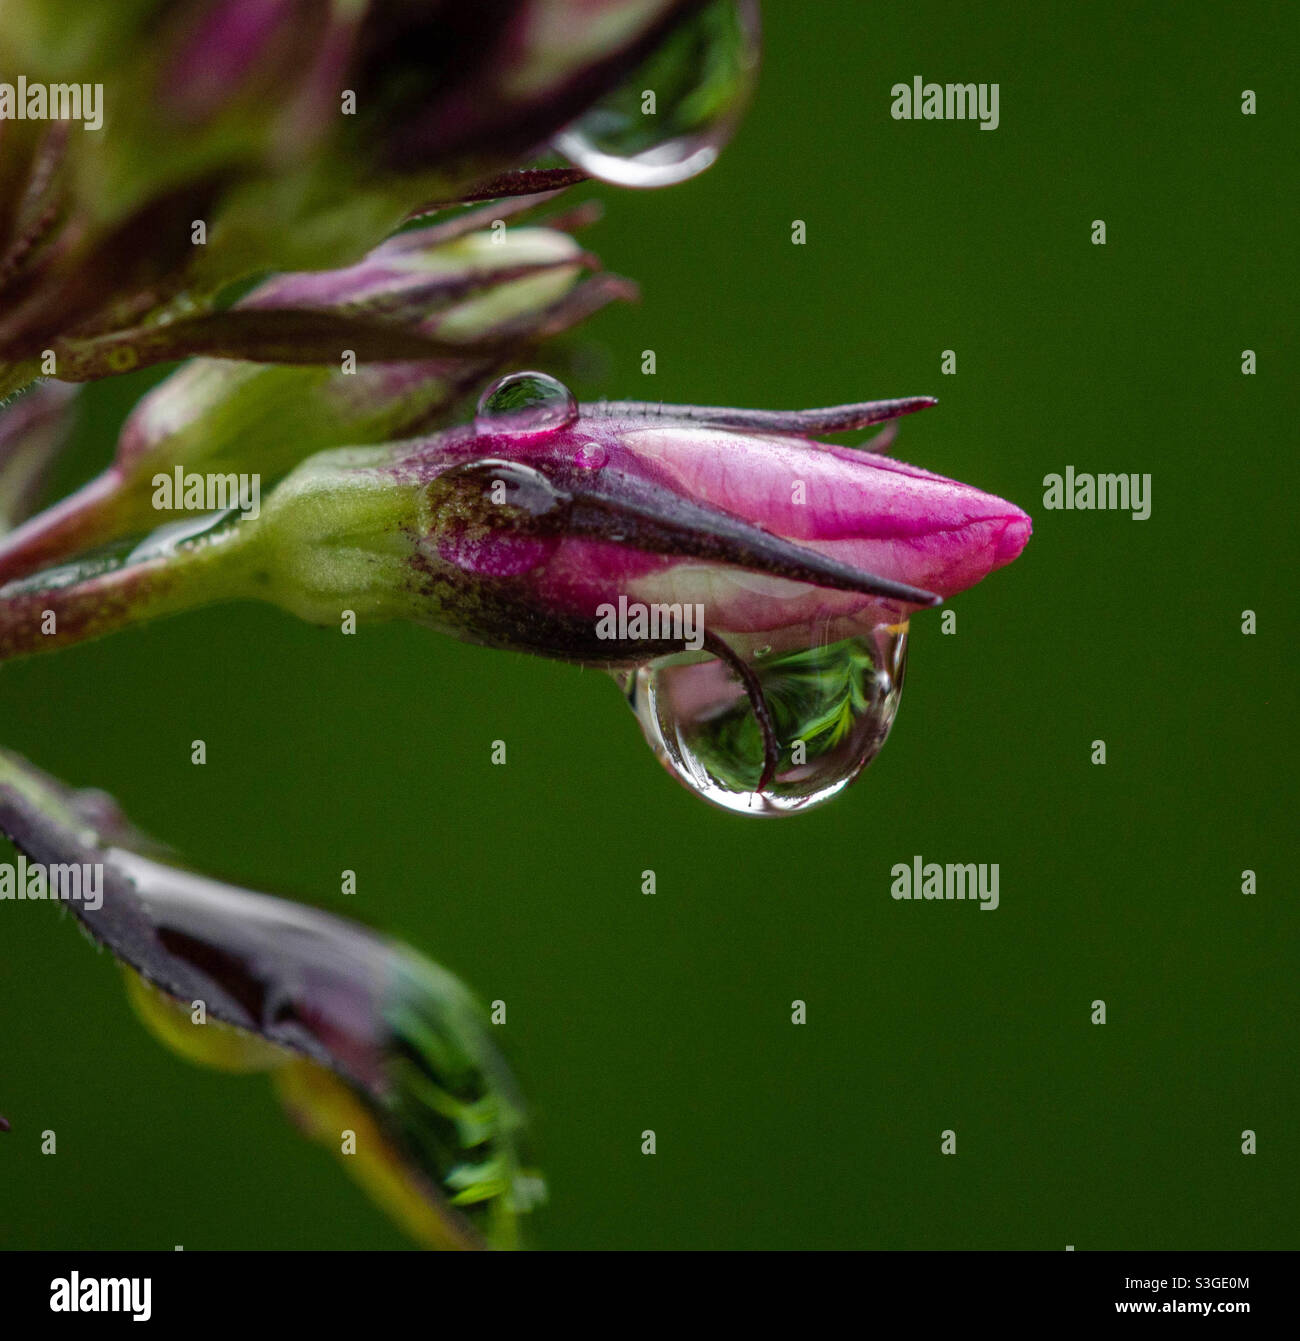 A tiny raindrop on a phlox flower reflecting the plants around it. Stock Photo